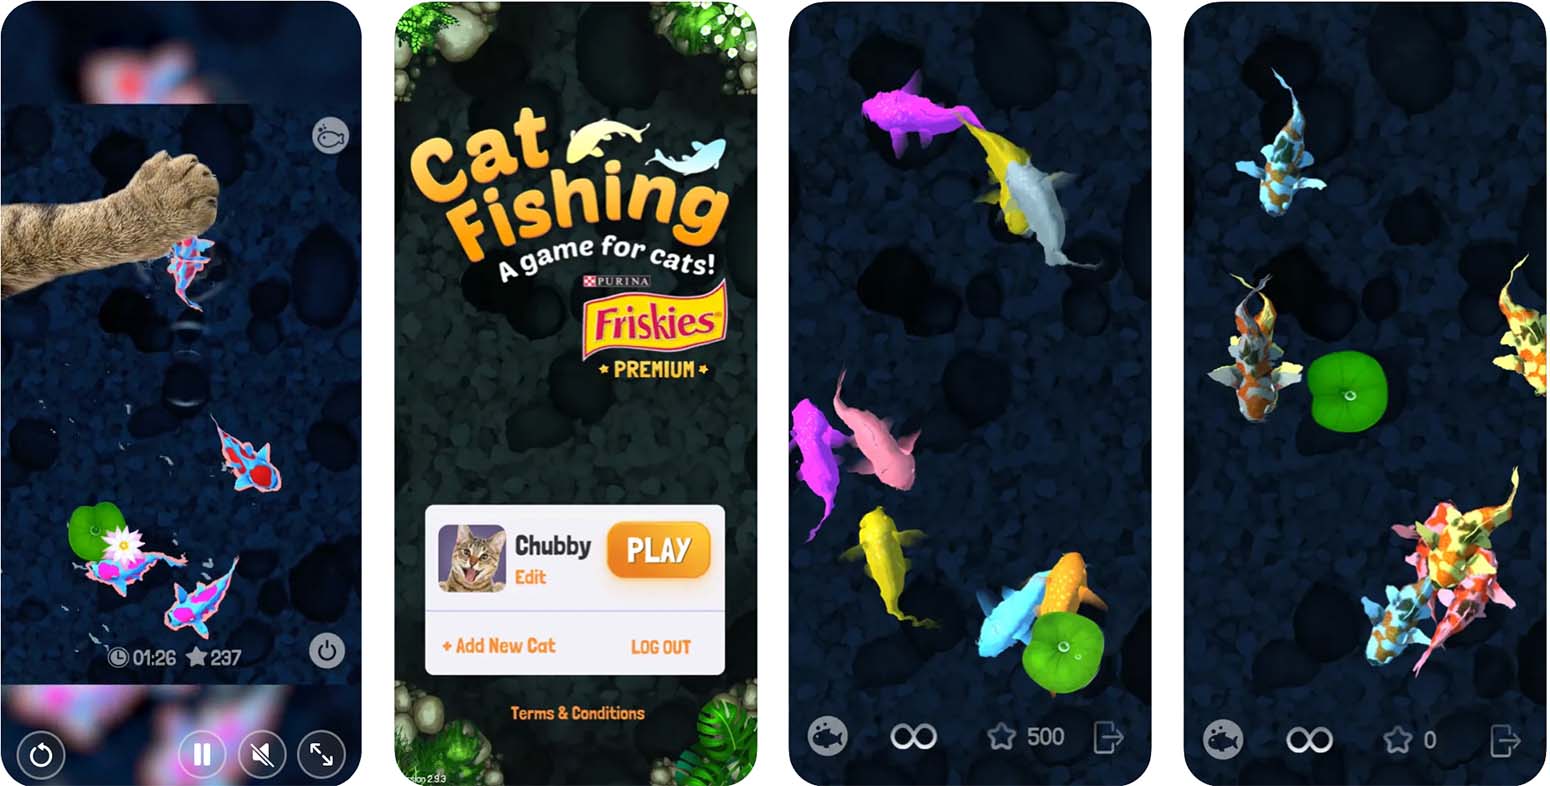 Friskies Cat Fishing App